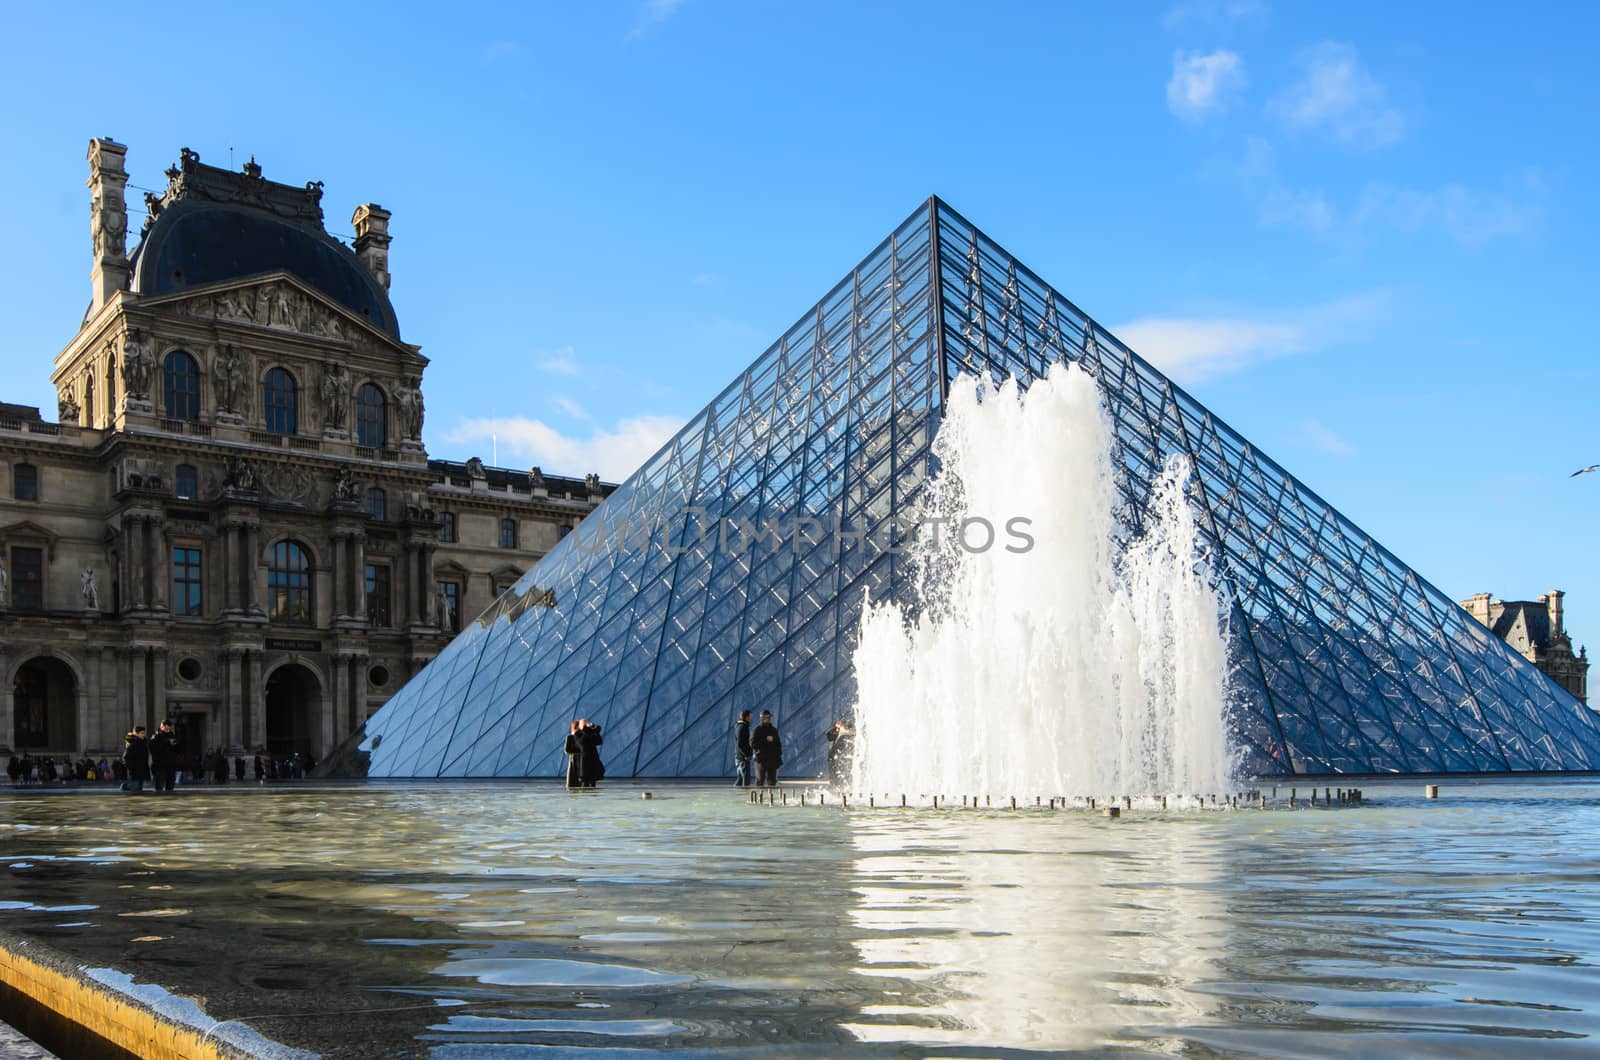 PARIS-DEC 26: Louvre museum is a triangular pyramid for an art exhibit December 26, 2013 in Paris.